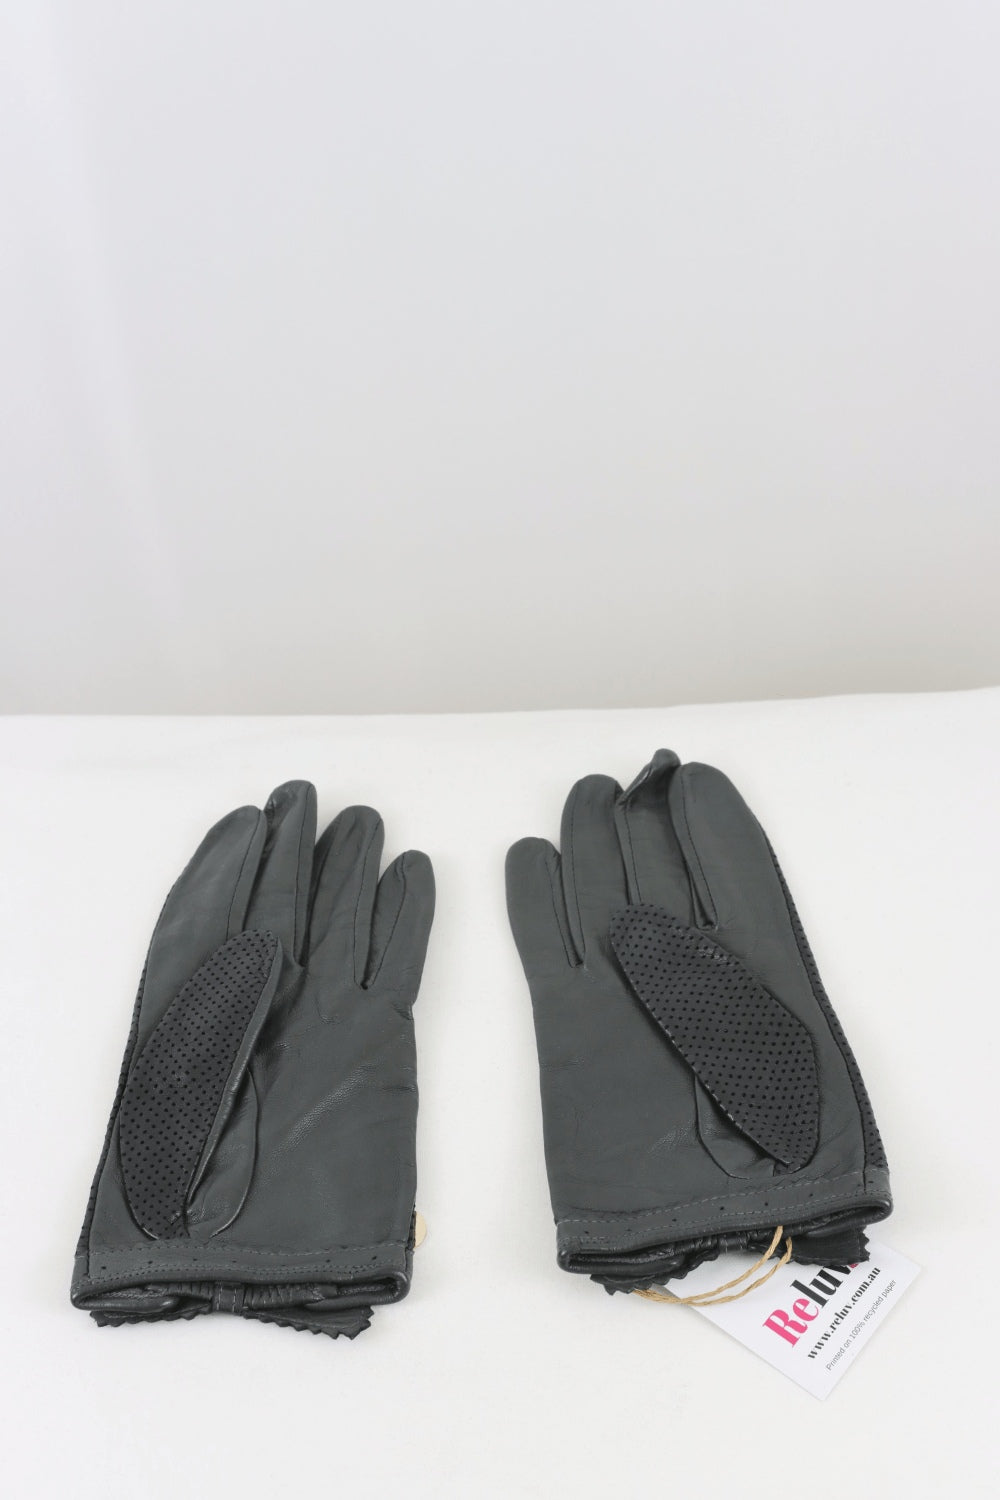 Mimco Black Gloves